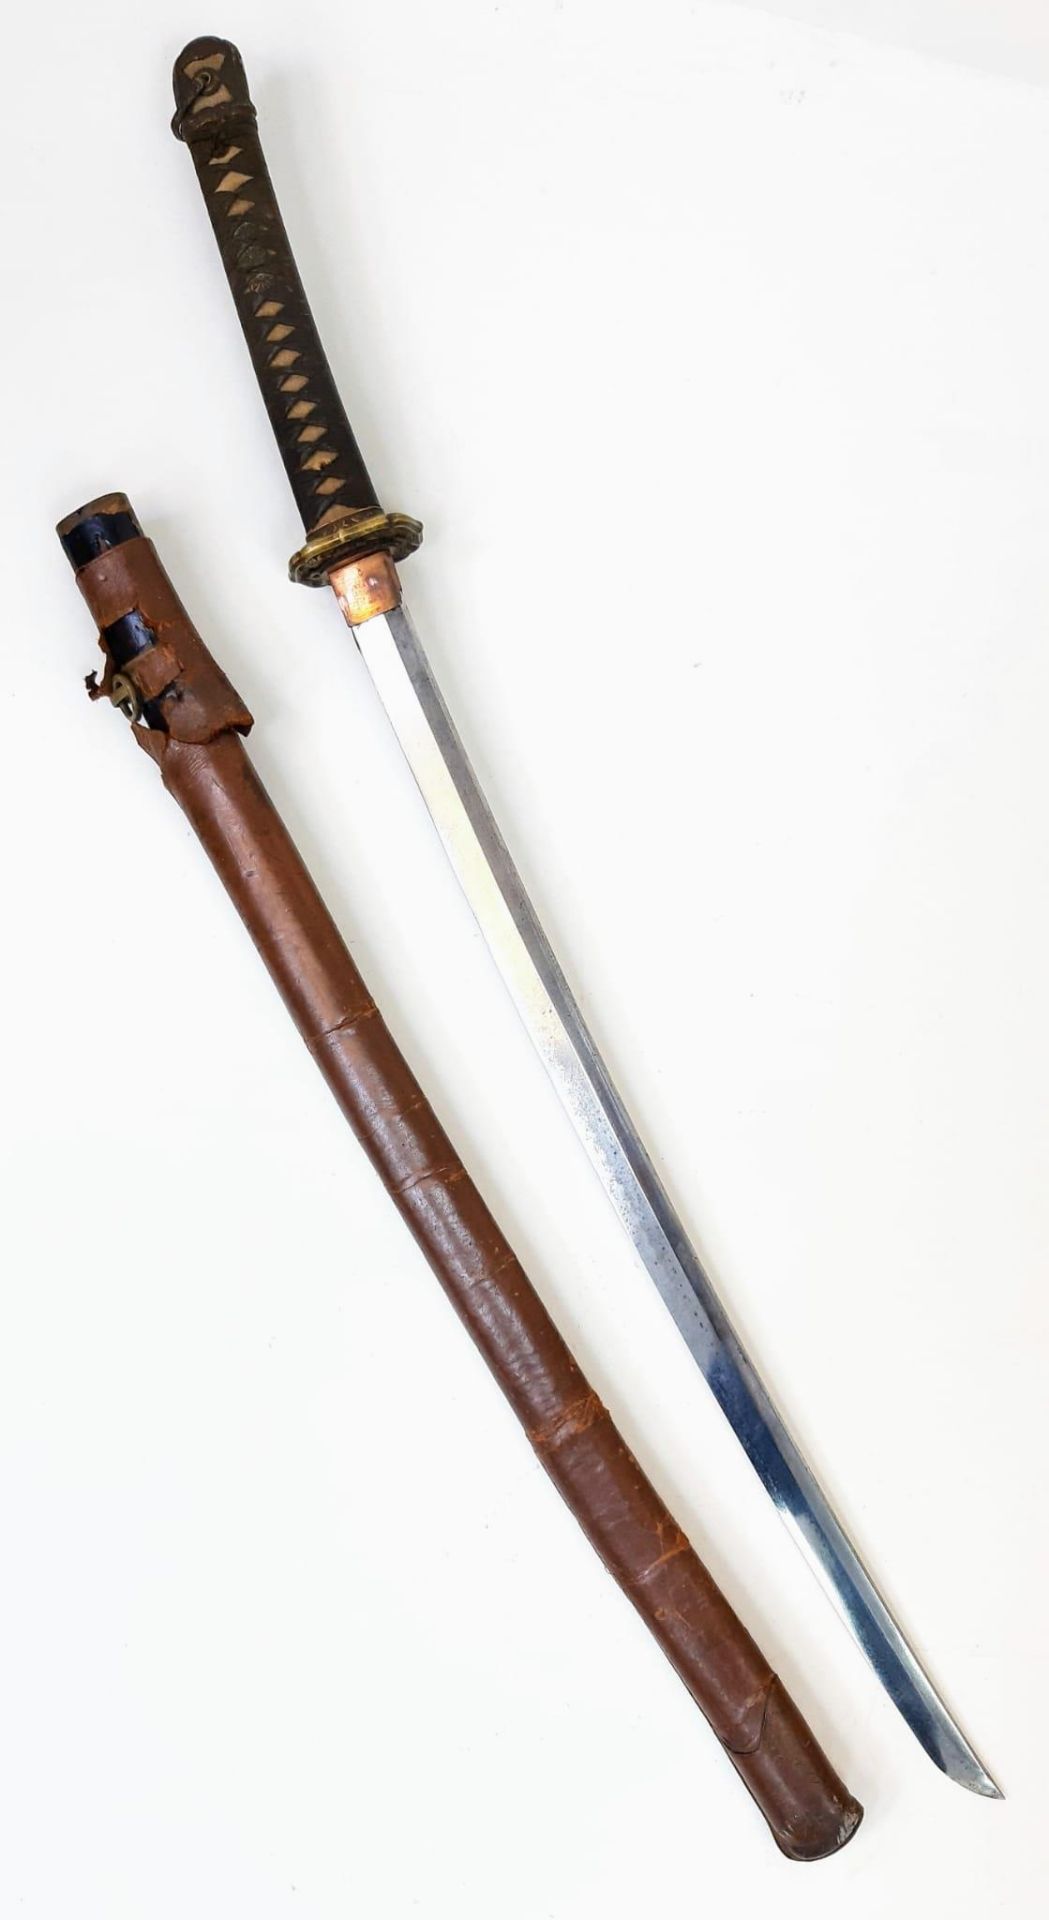 WW2 Japanese Officers Type 98 Shin-Guntō Sword. Leather combat scabbard. Nice markings on the